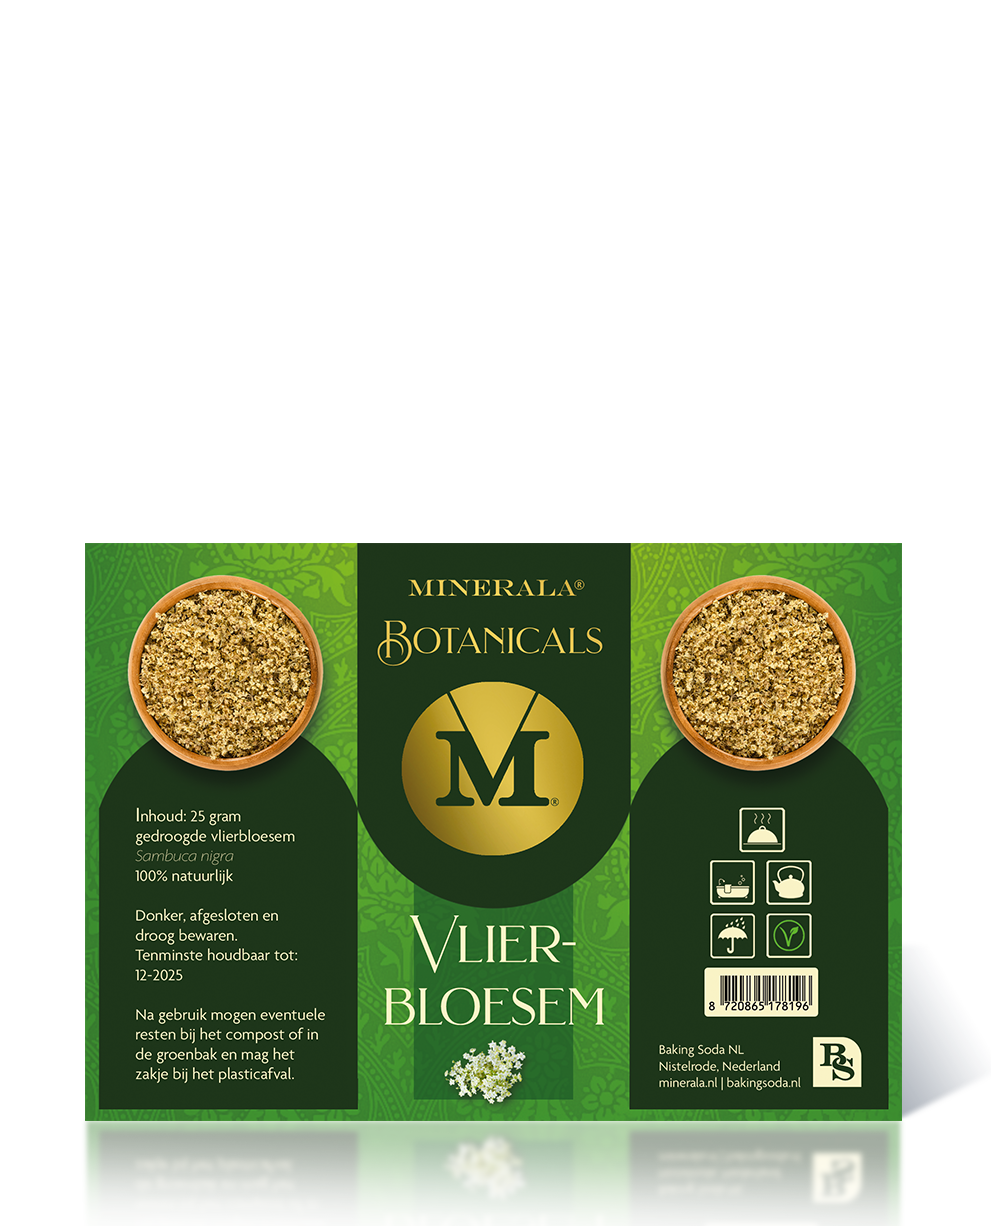 Minerala Botanicals Vlierbloesem - Bakingsoda NL